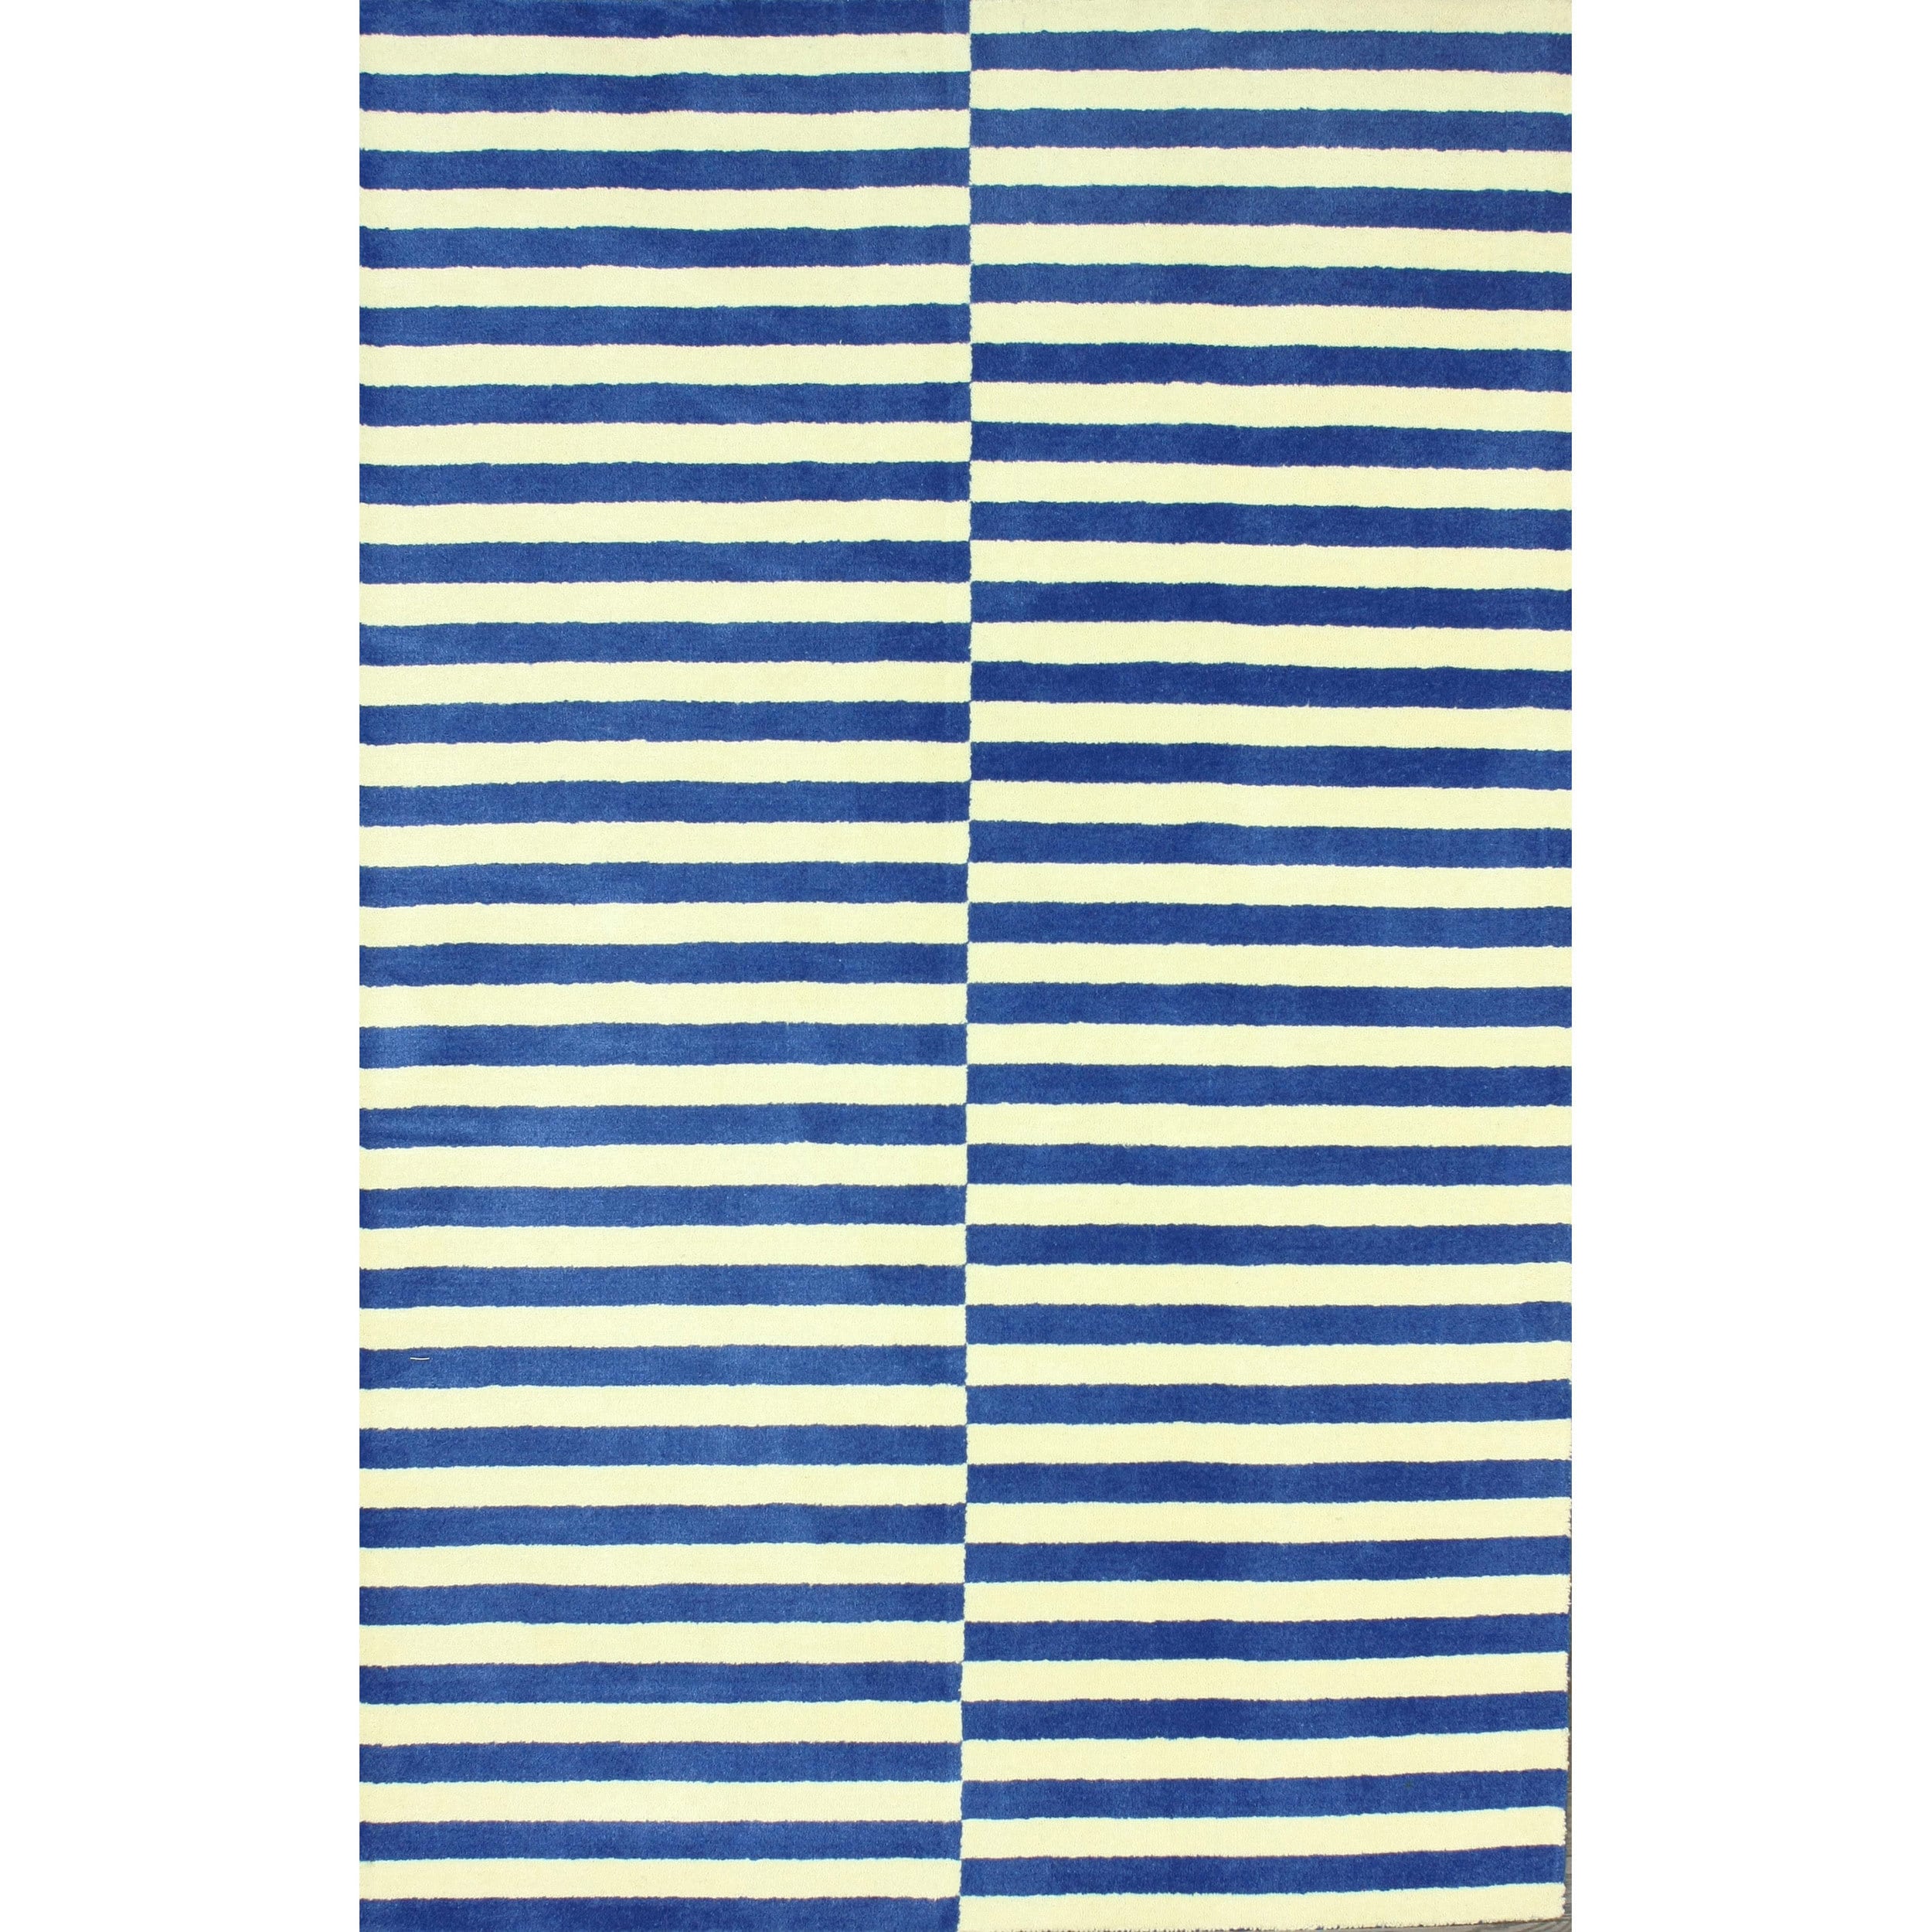 Nuloom Hand tufted Modern Stripes Blue New Zealand Wool Rug (5 X 8)